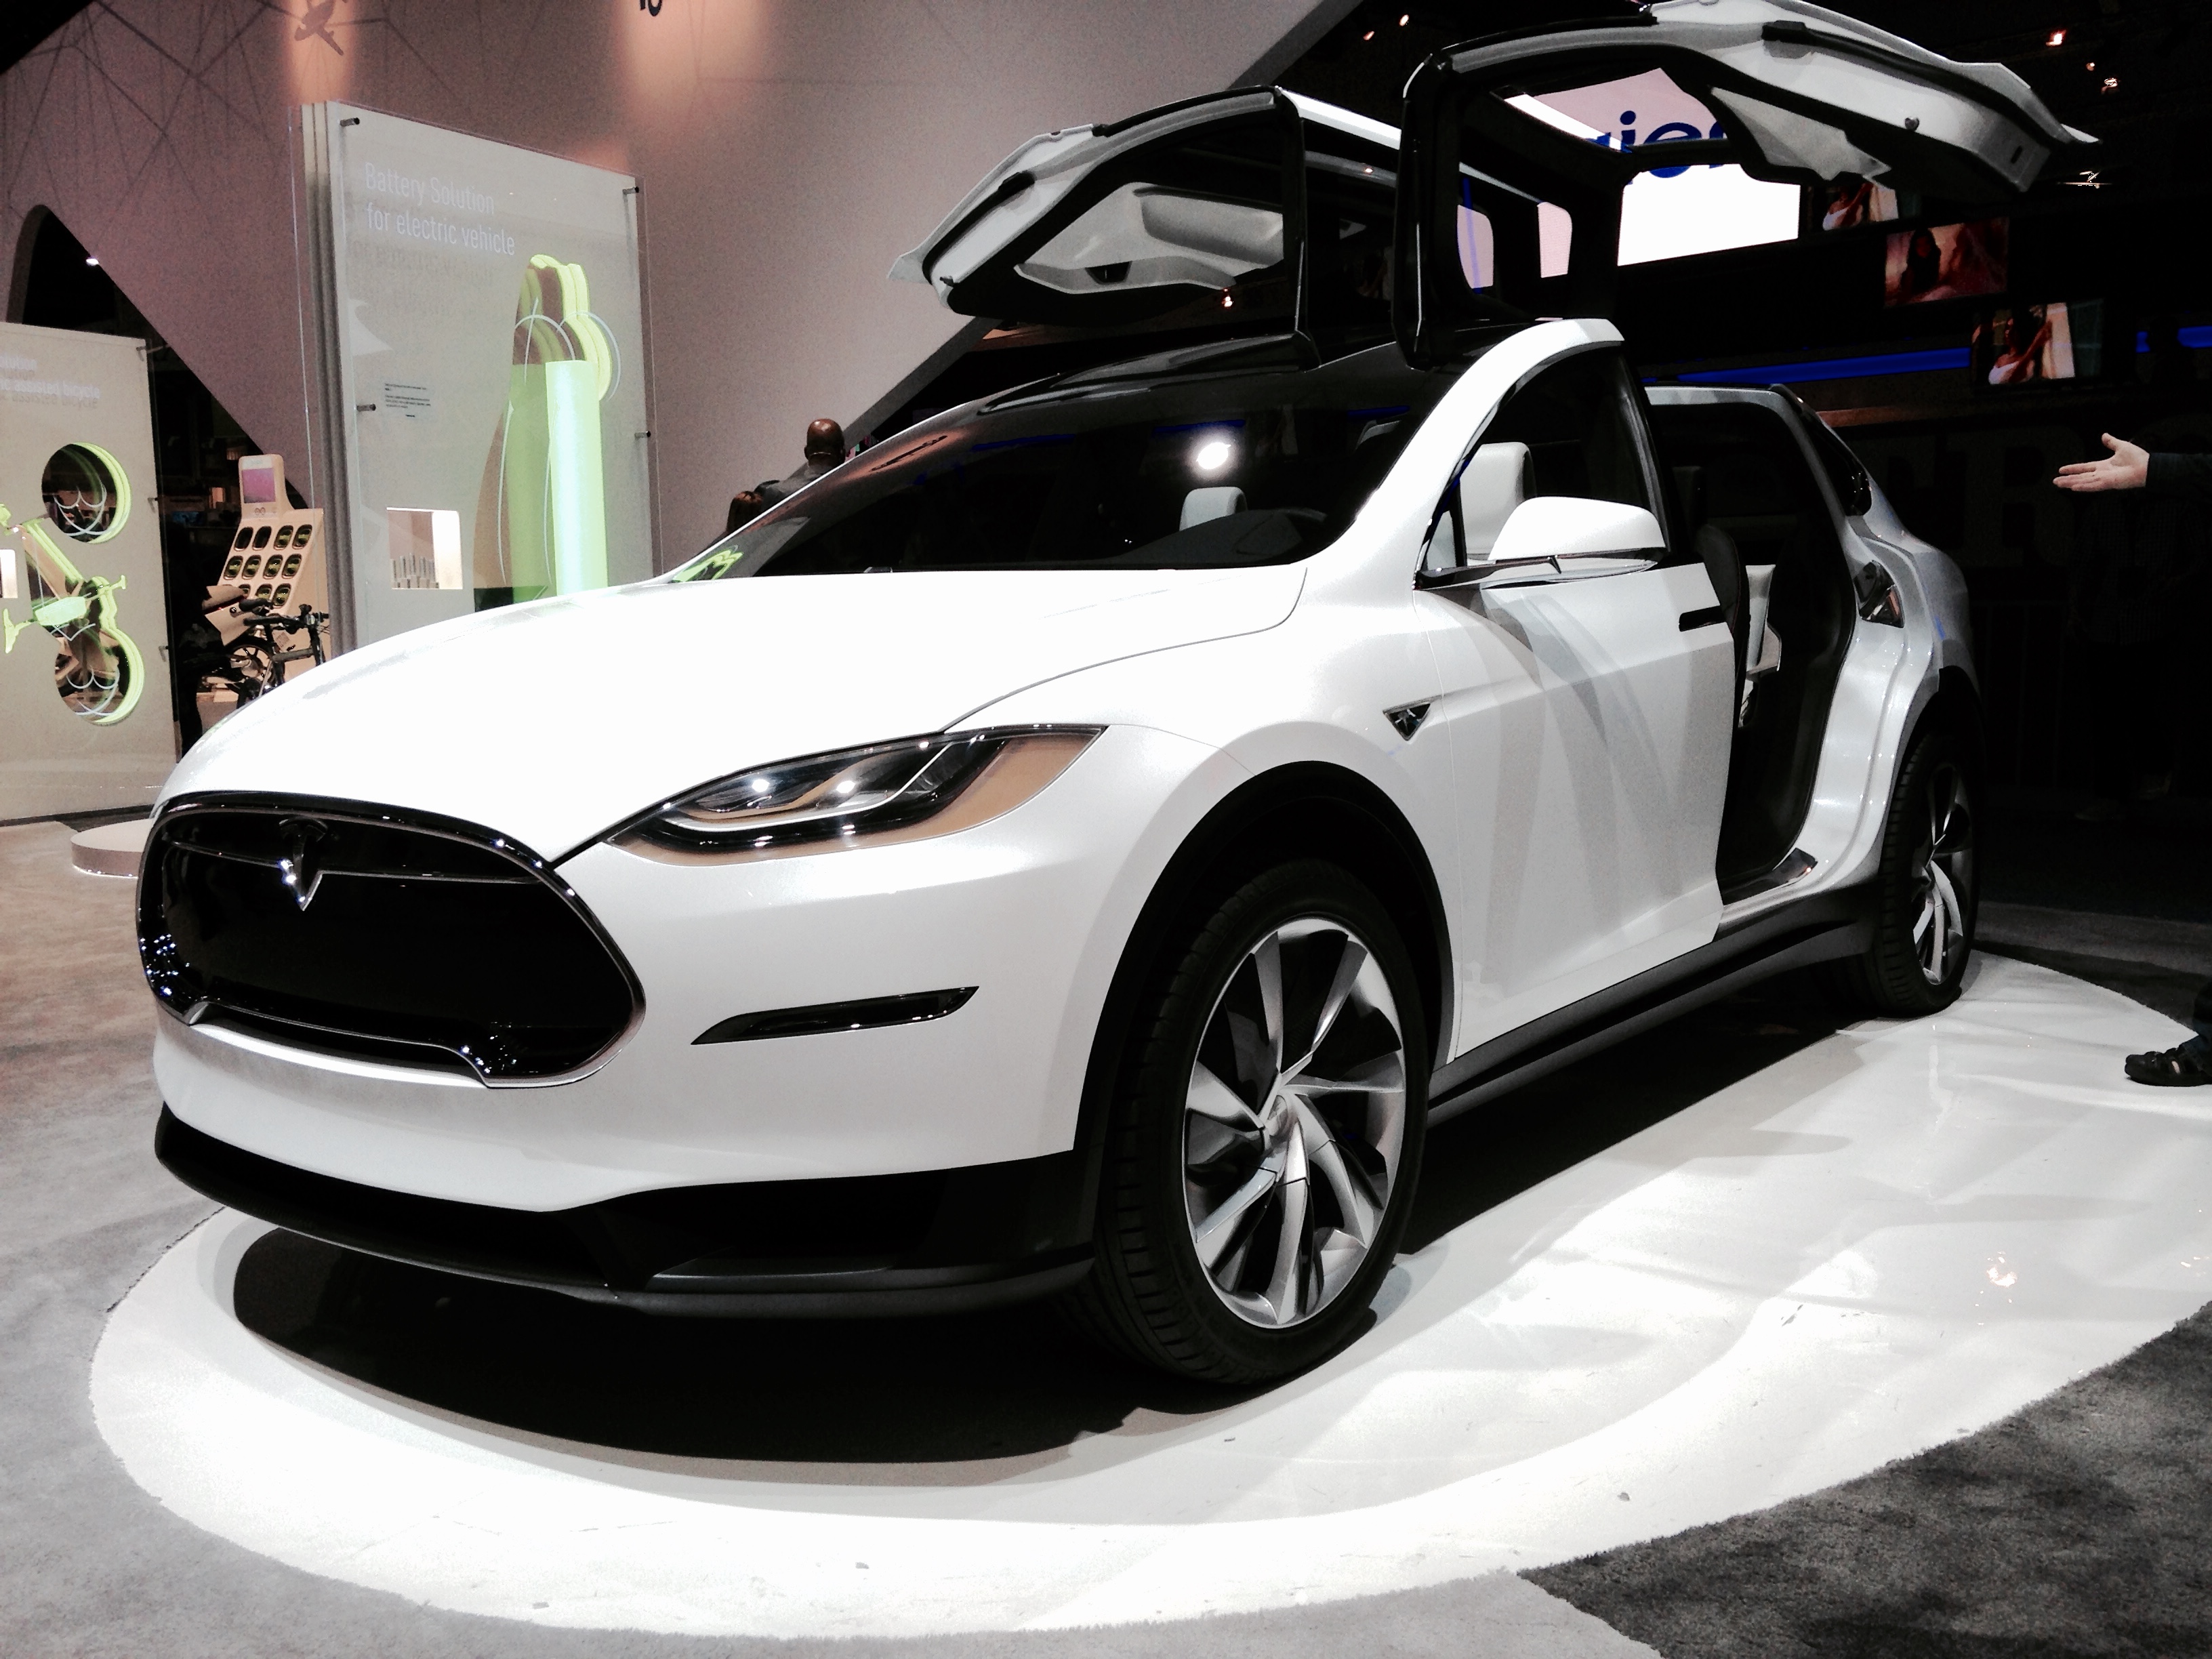 Pirelli supporting Tesla SUV development